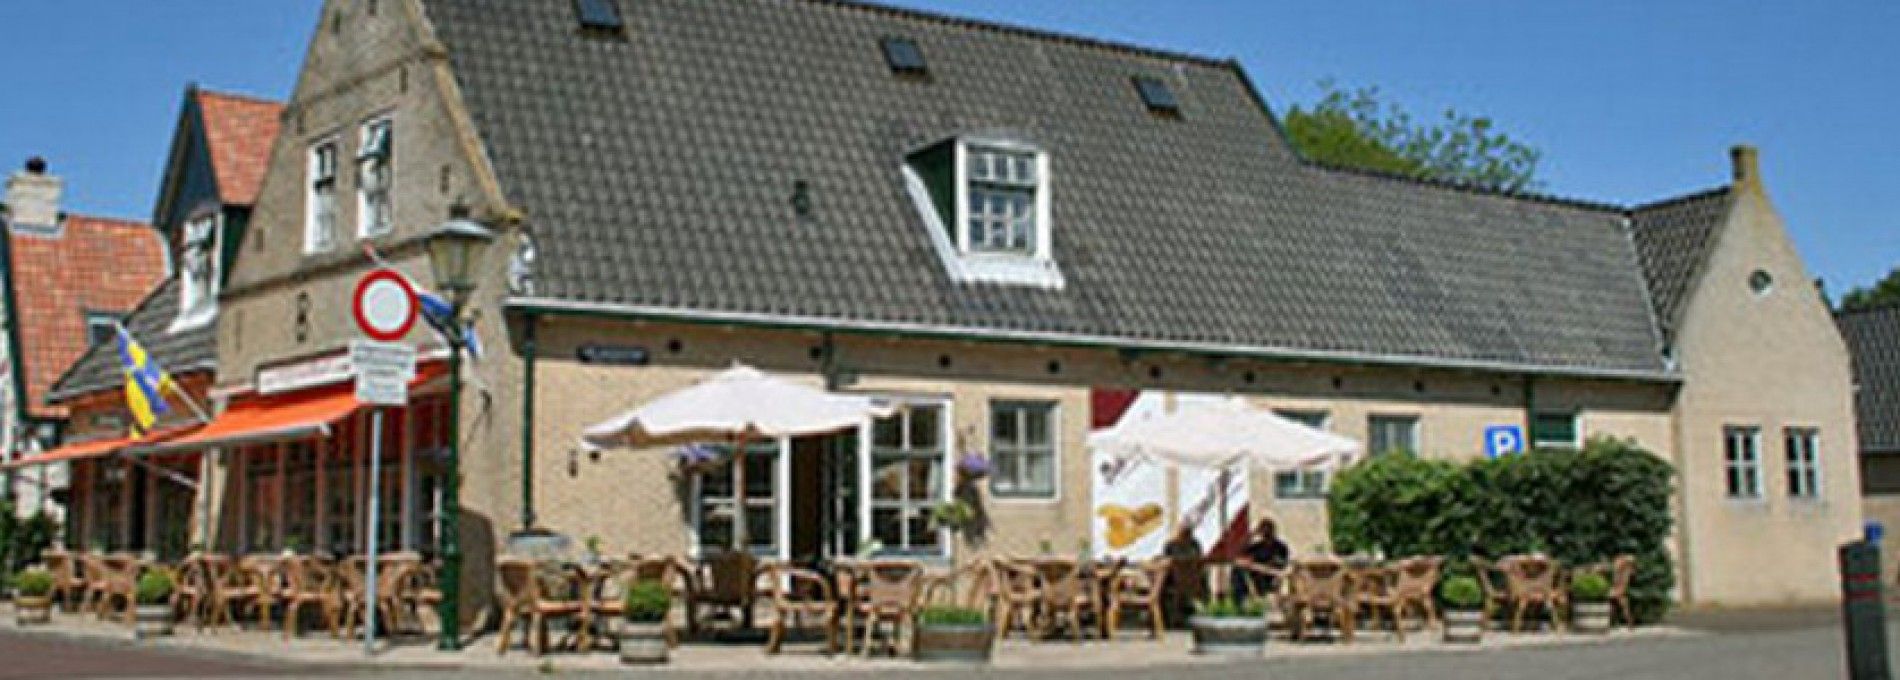 Coffeehouse Bakery P.J. de Boer - Tourist Information “VVV”Ameland